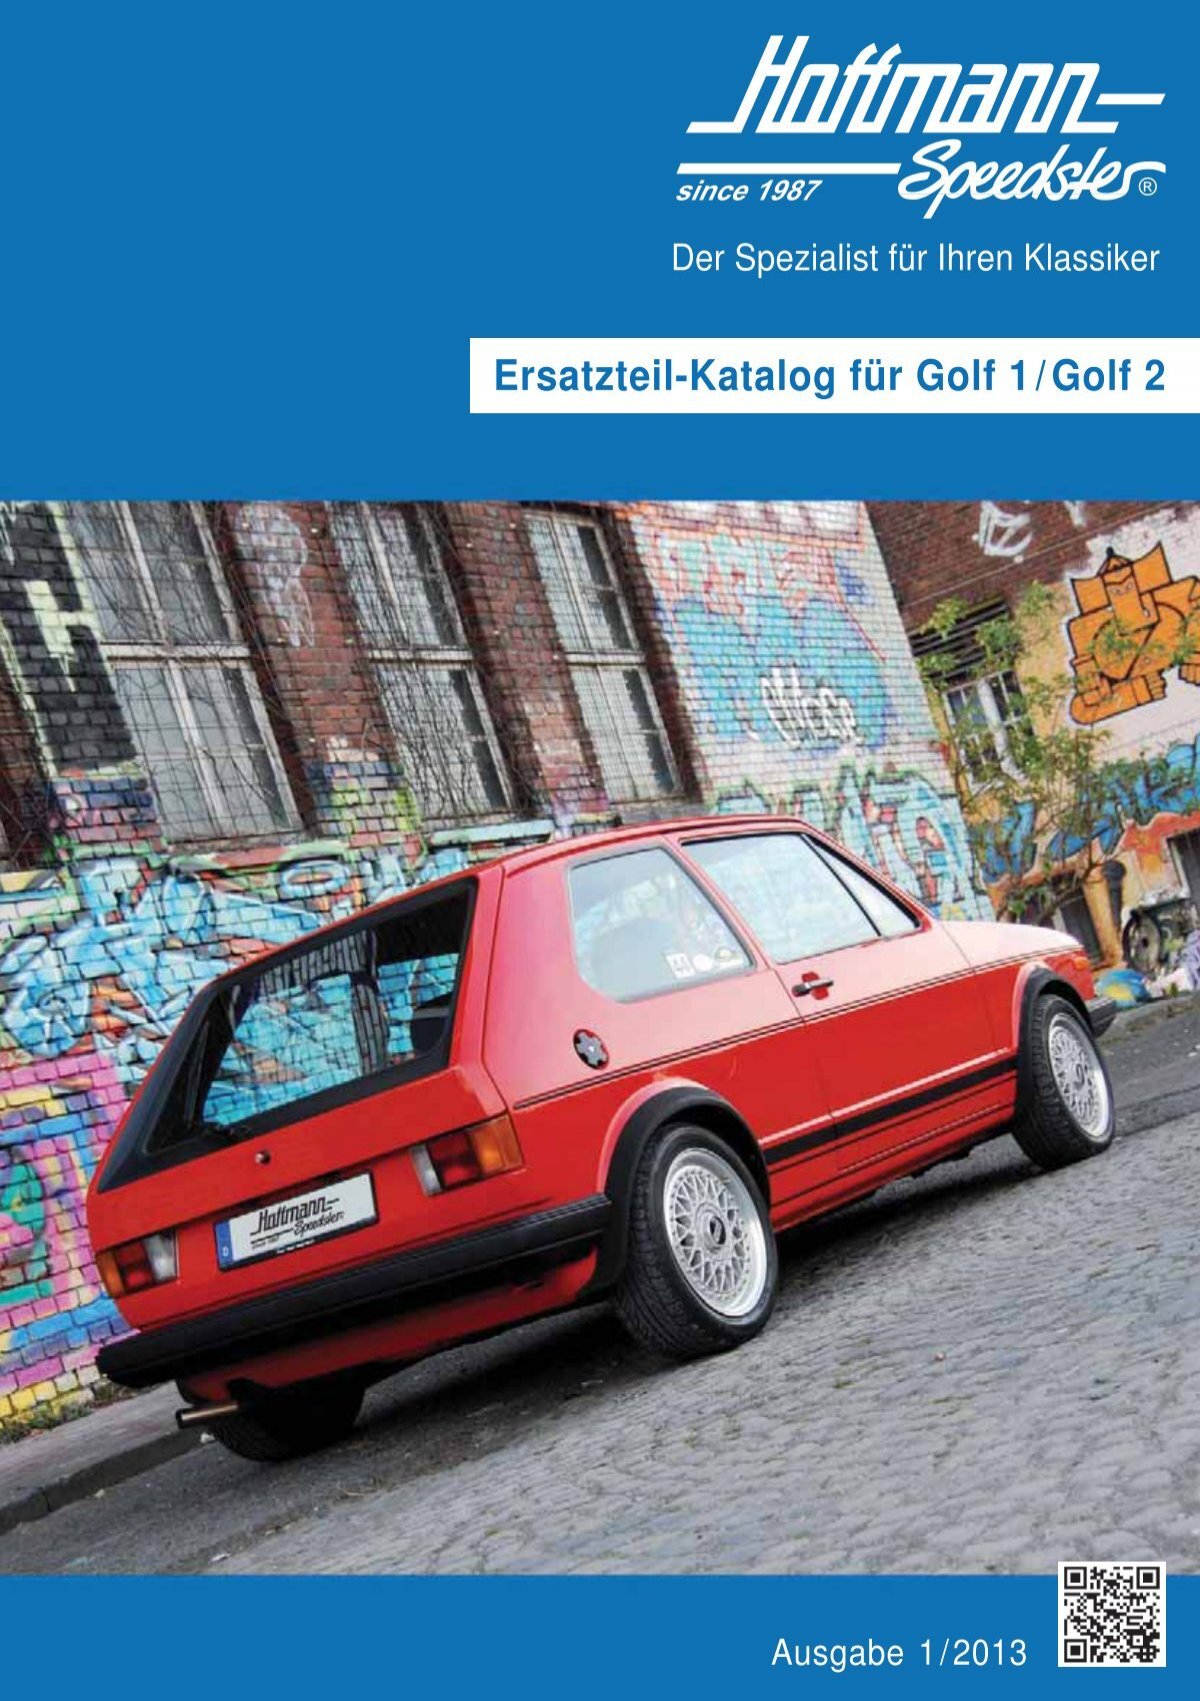 Ersatzteil-Katalog für Golf 1/Golf 2 - Hoffmann Speedster